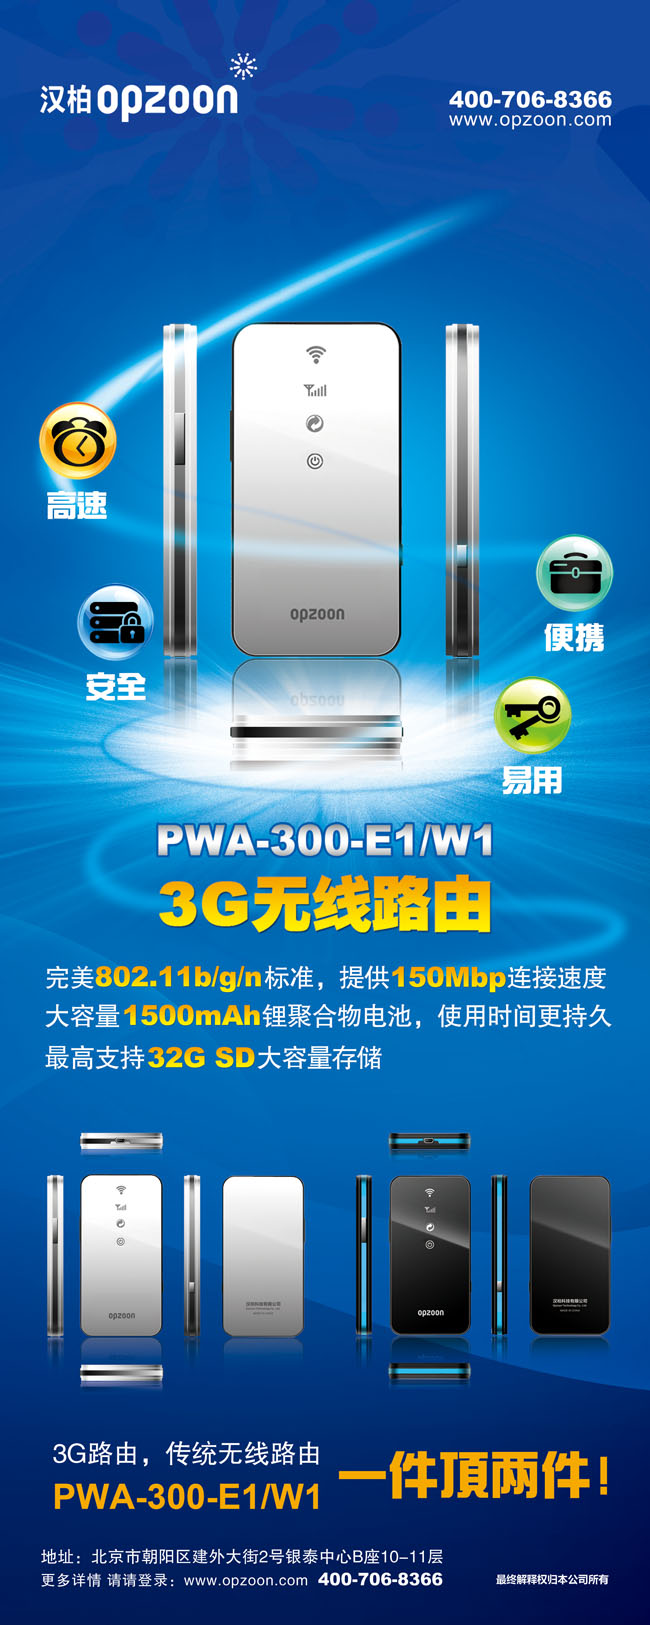 3G无线路由易拉宝广告PSD素材